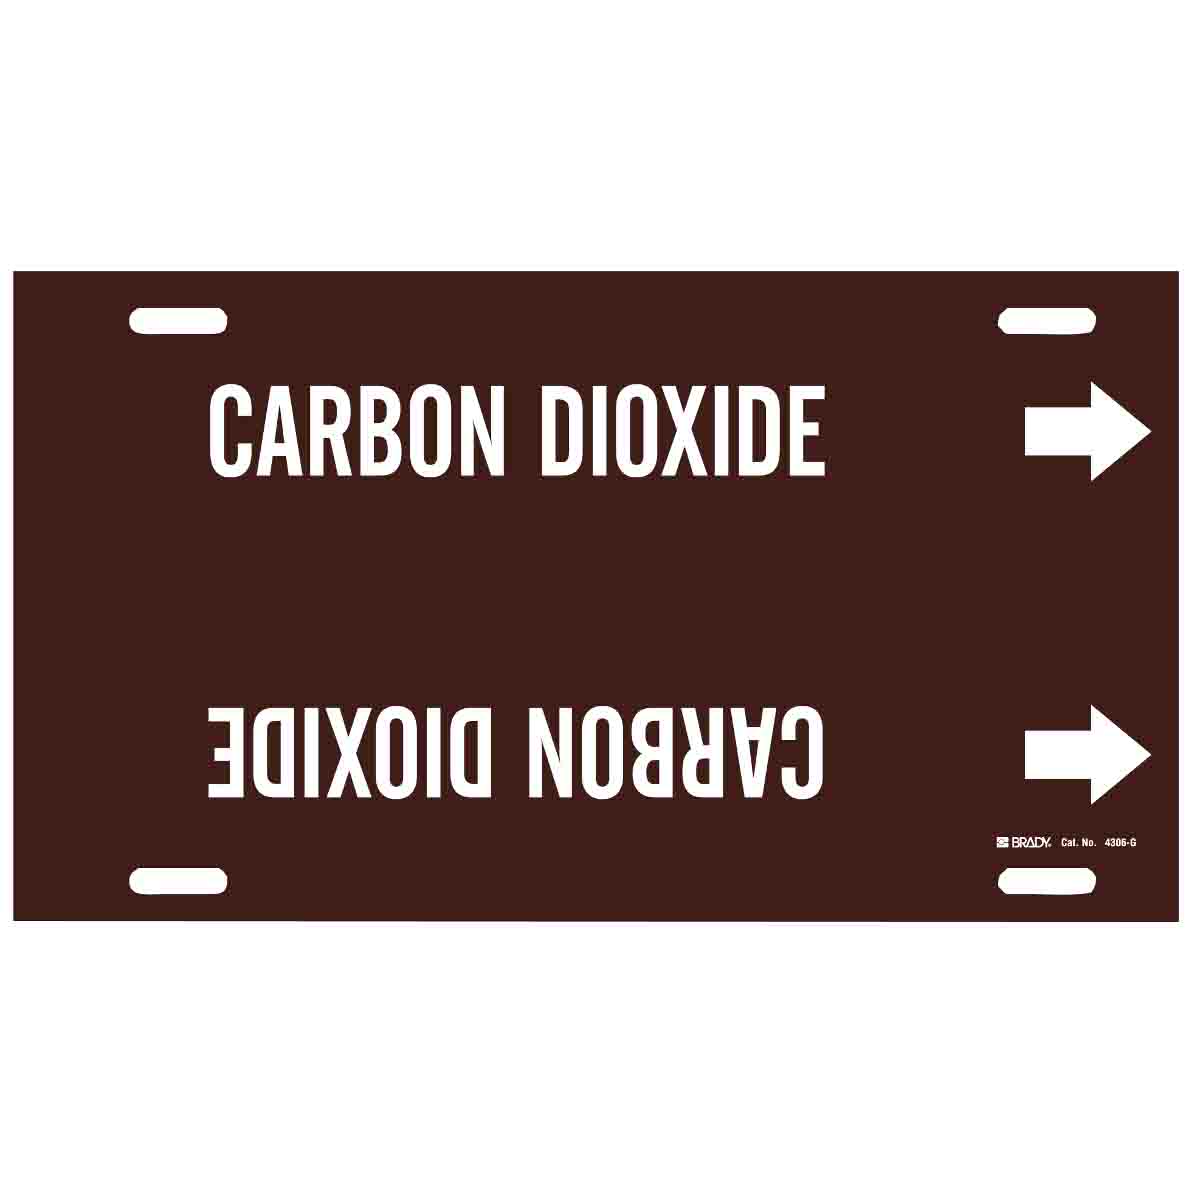 CARBON DIOXIDE WHITE / BROWN